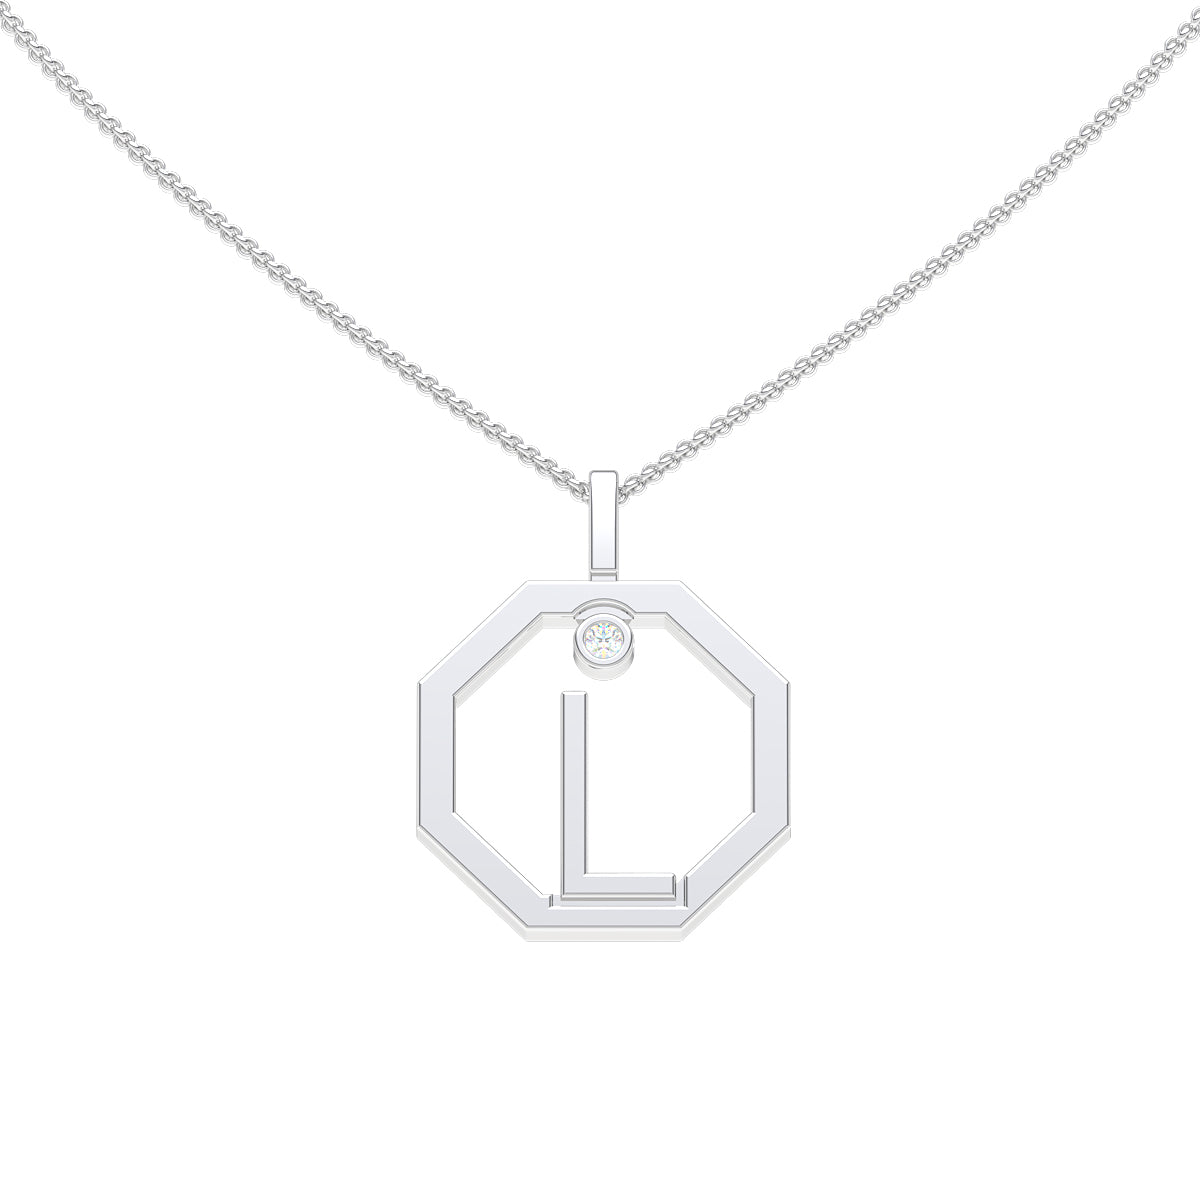 Personalised-Initial-L-diamond-white-gold-pendant-Lizunova-Fine-Jewels-Sydney-NSW-Australia